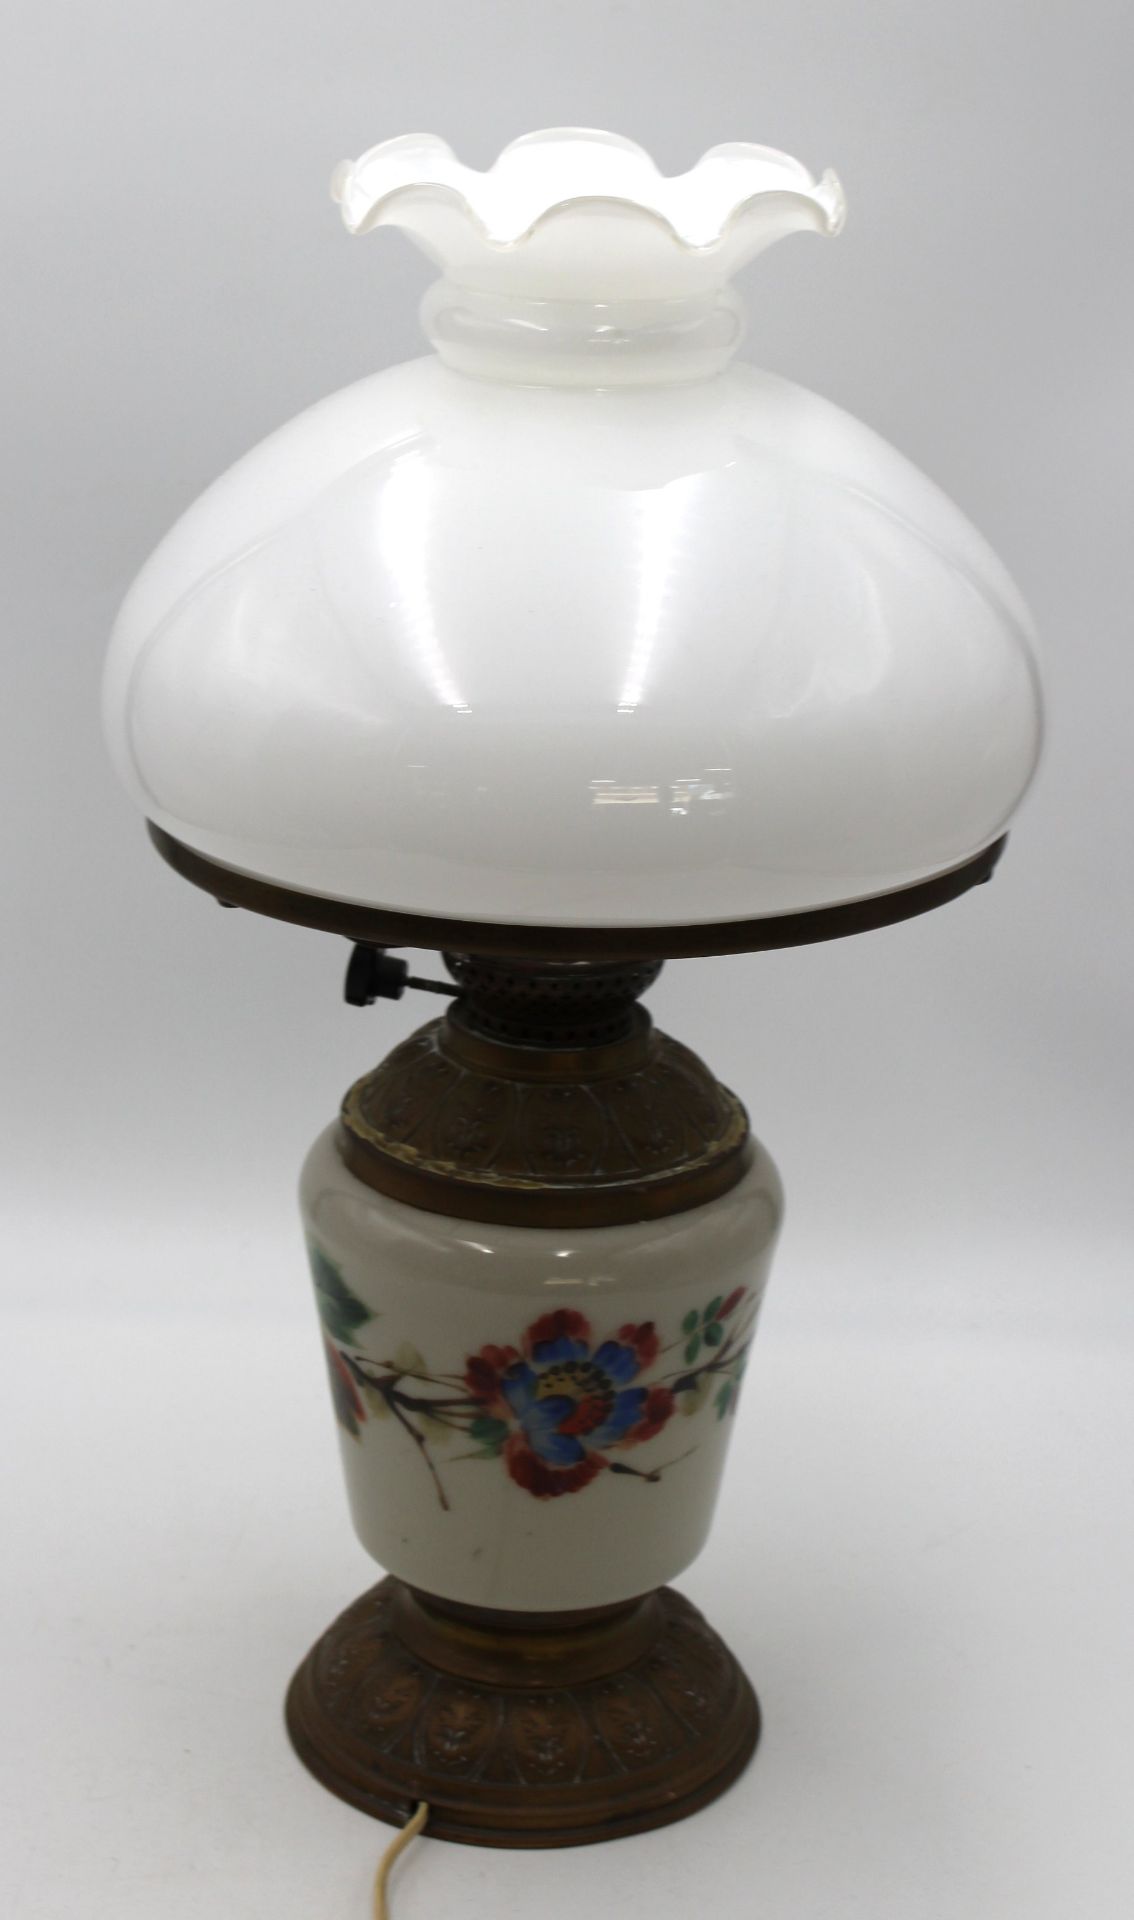 Tischlampe, elektrifizierte Petroleumlampe, Korpus 19. Jhd., florale Bemalung, H-46,5cm. - Image 2 of 3